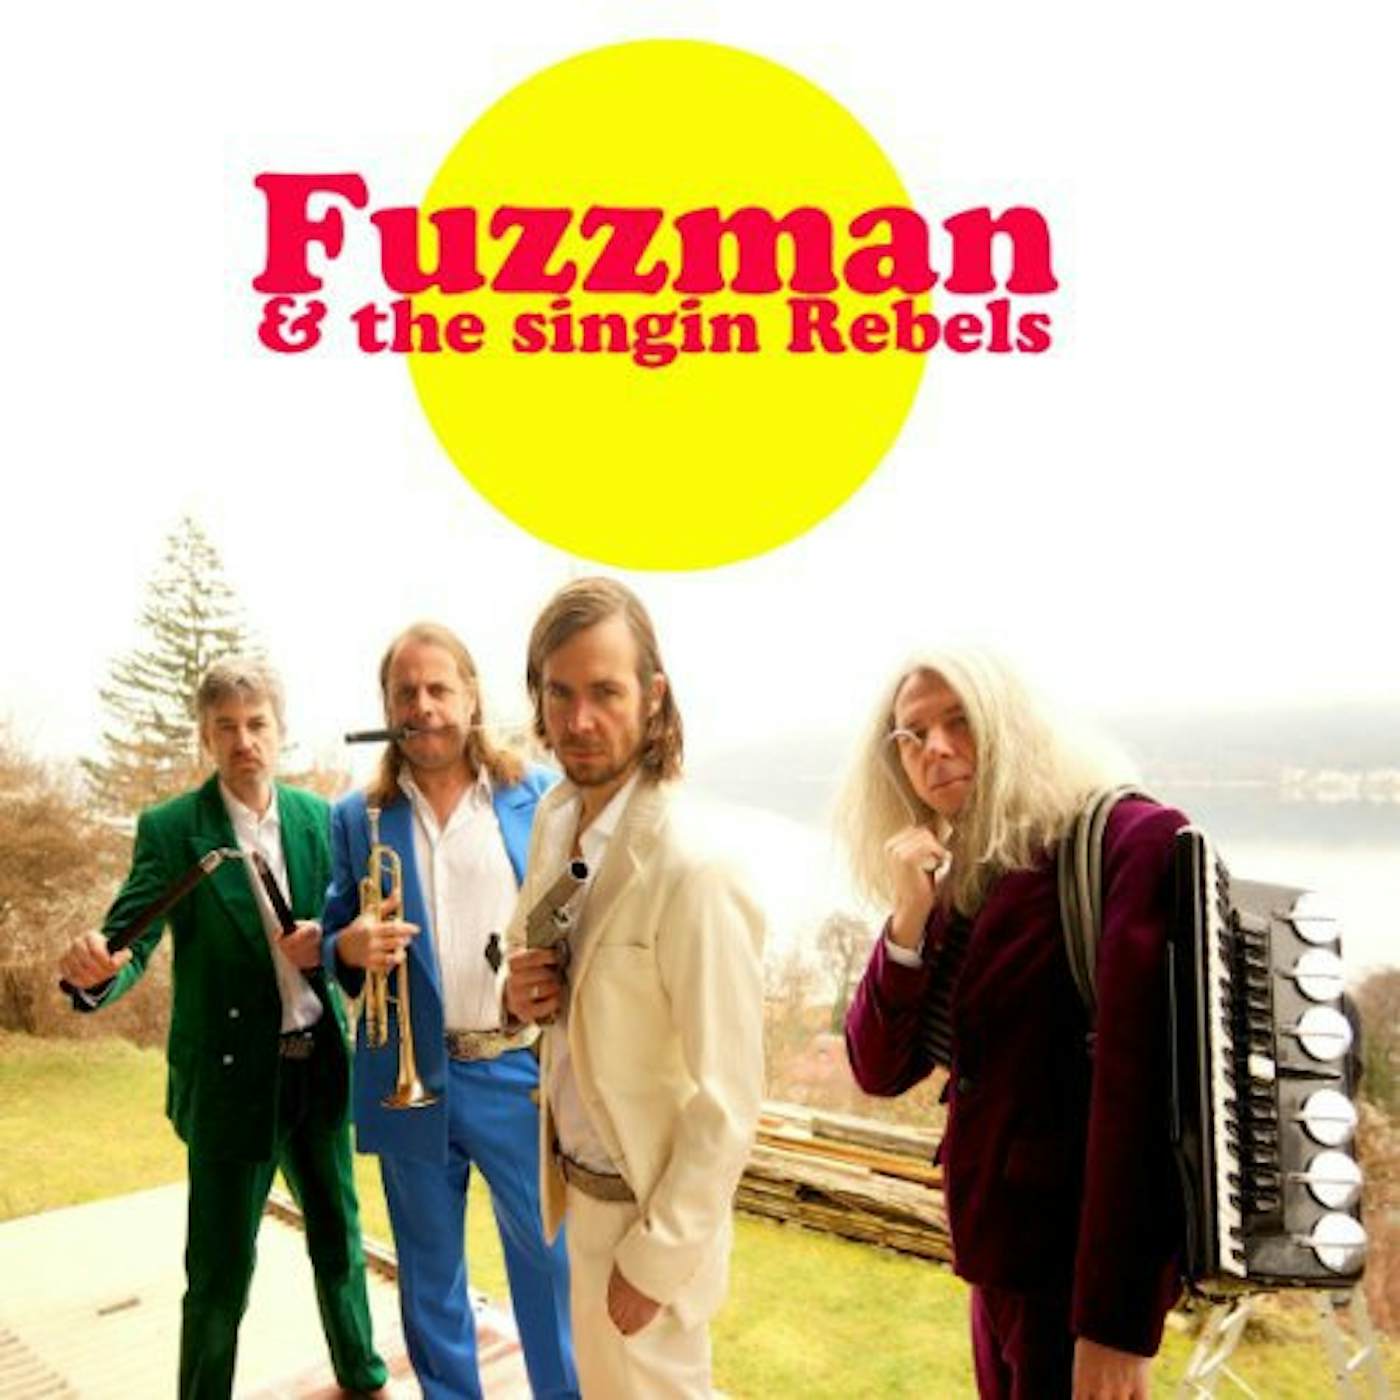 FUZZMAN & THE SINGIN REBELS (GER) Vinyl Record